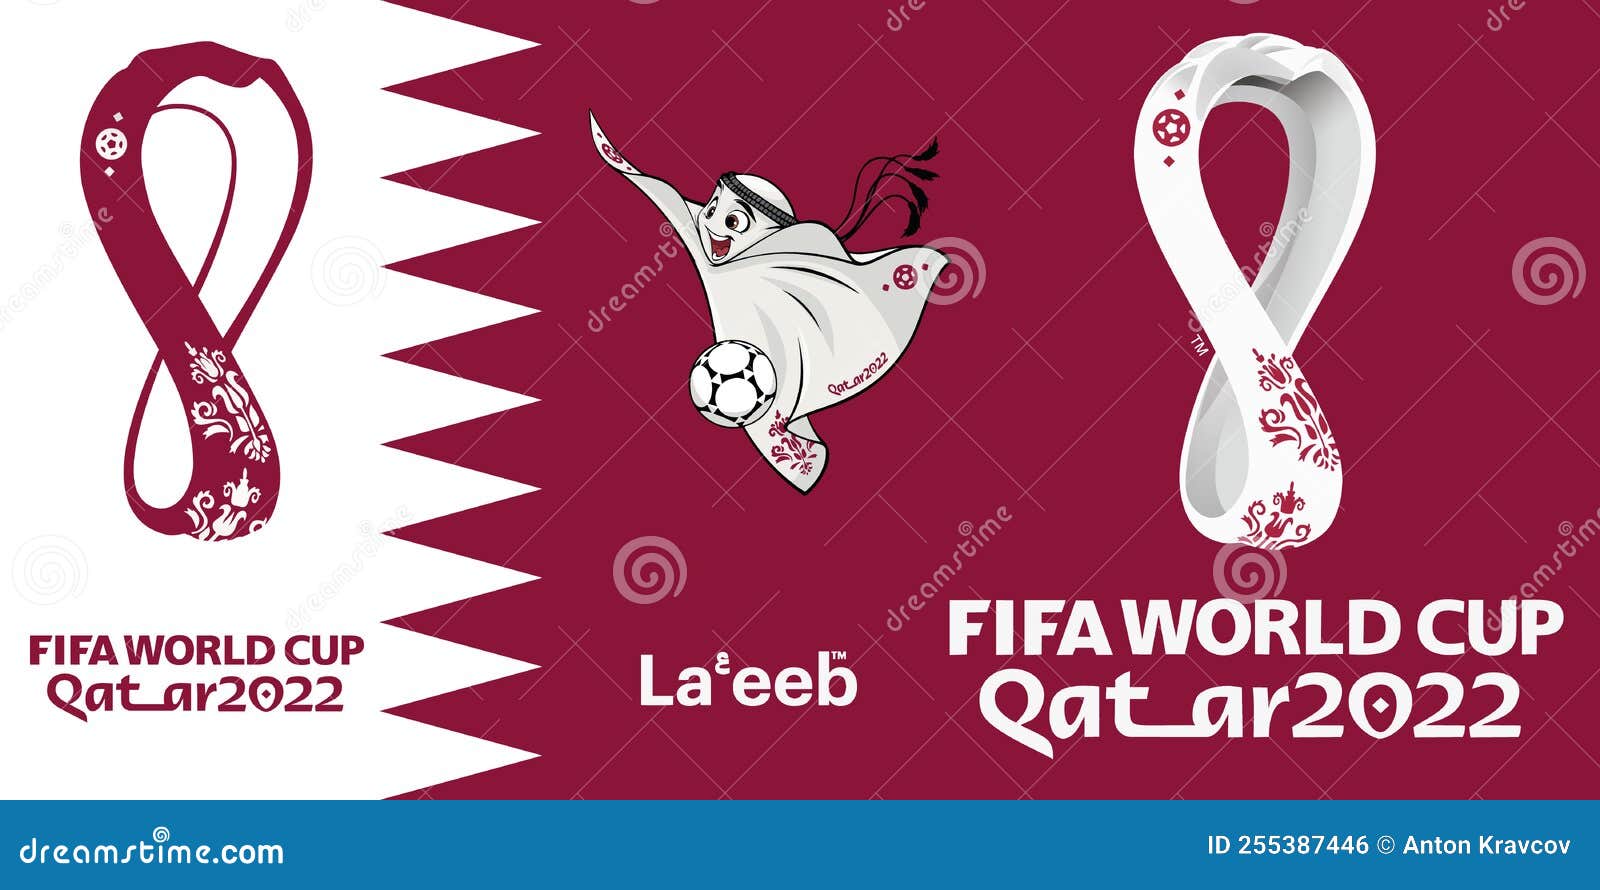 Fifa World Cup Logo 2022 Qatar 2022 Editorial Photo Illustration Of